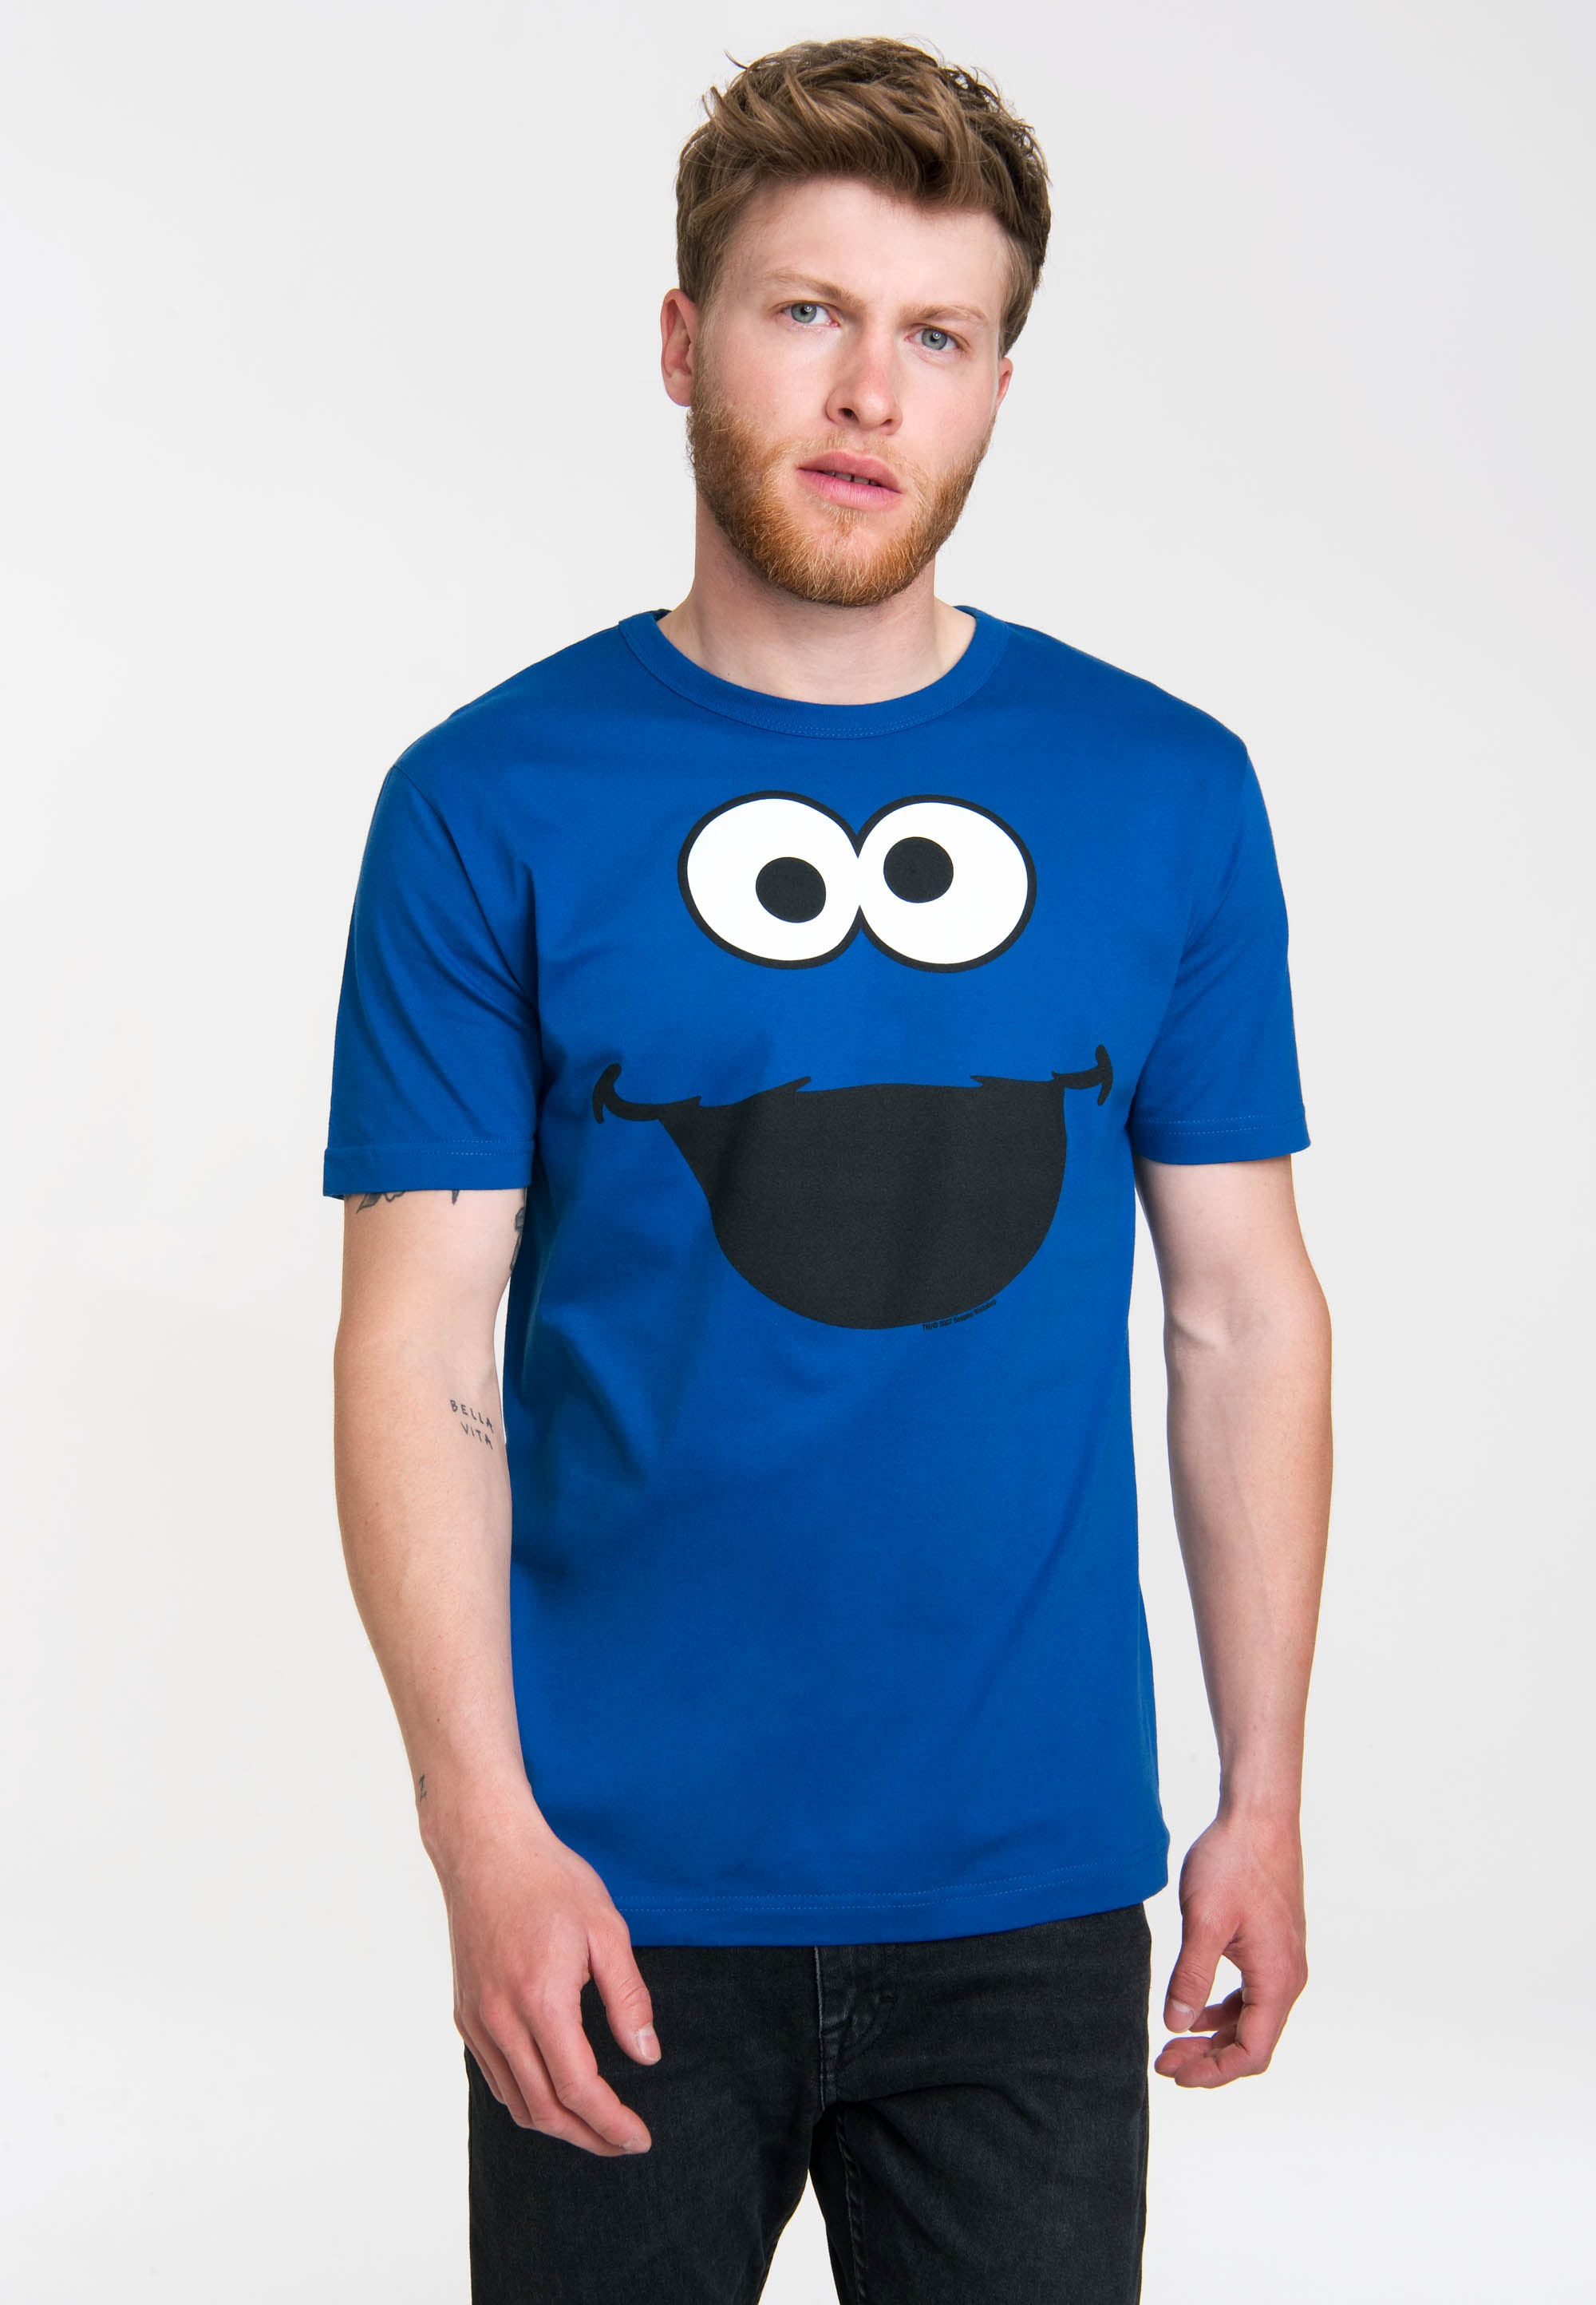 Logoshirt Krümelmonster T-Shirt - Gesicht - Sesamstrasse T-Shirt Original - Rundhals T-Shirt Cookie Monster Shirt - blau - Lizenziertes Originaldesign, Größe L